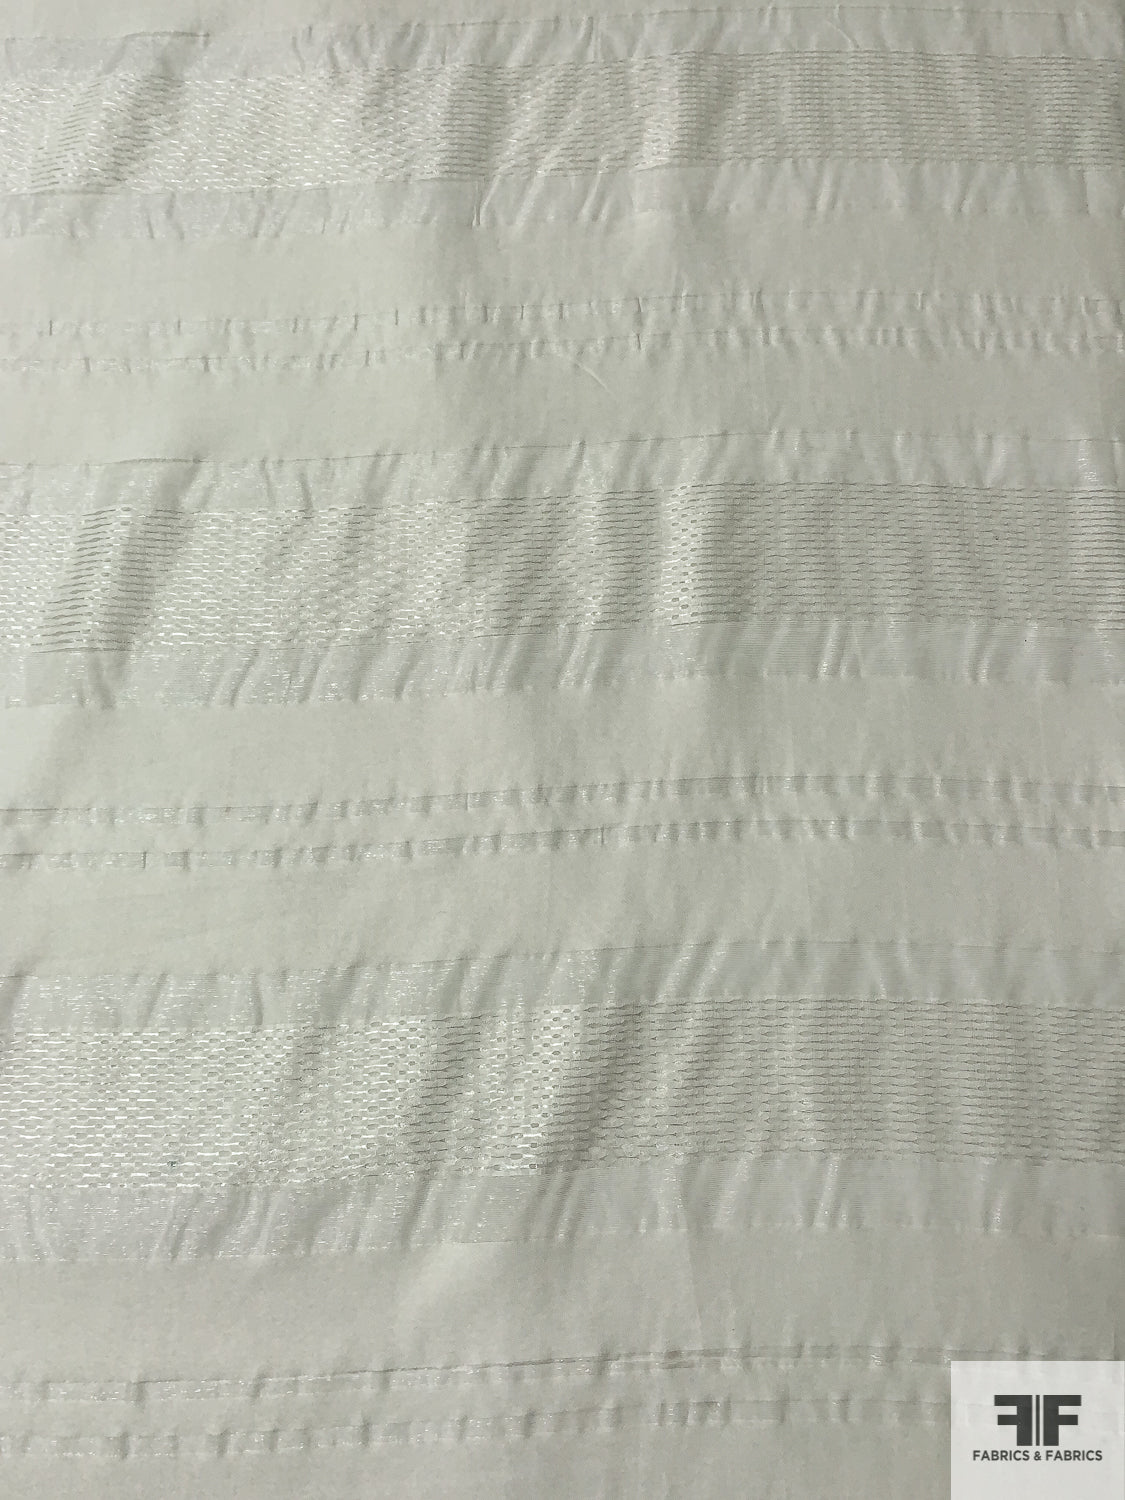 Multi-Striped Shimmer Organza with Birdseye Pattern - Off-White